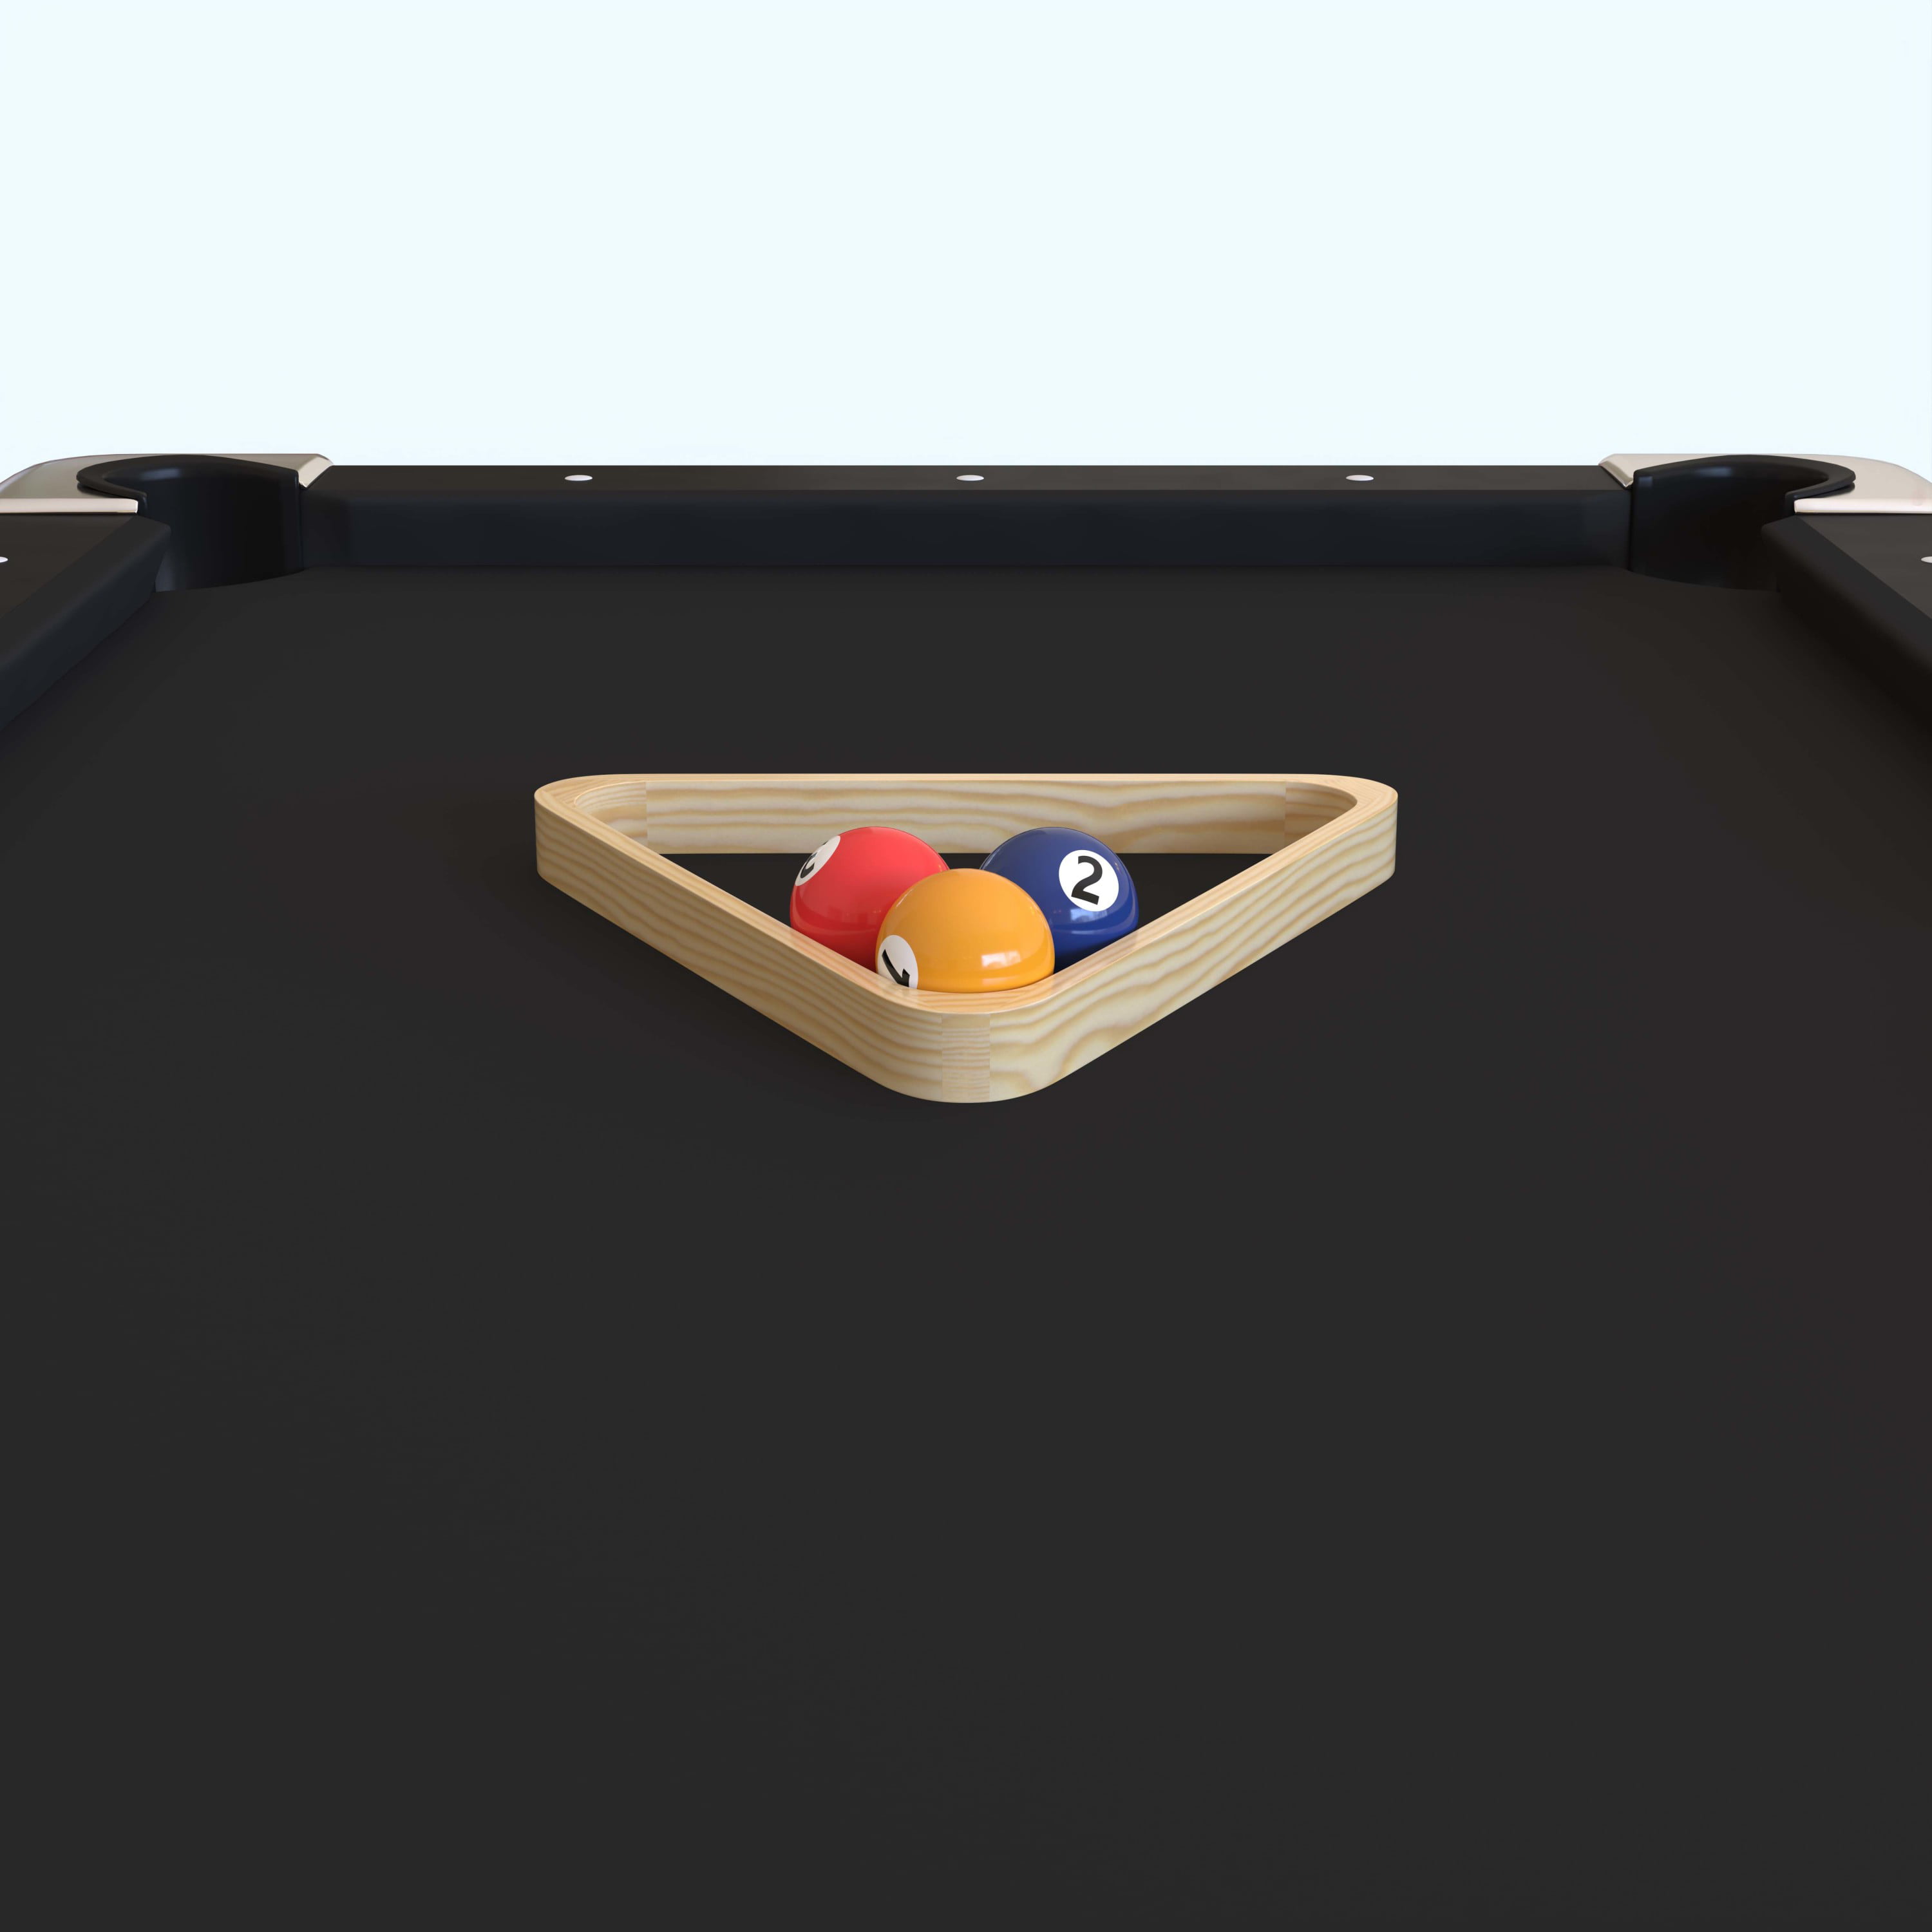 The Professional Billiard Tray Contains 8 Billiard Pool Accessories 